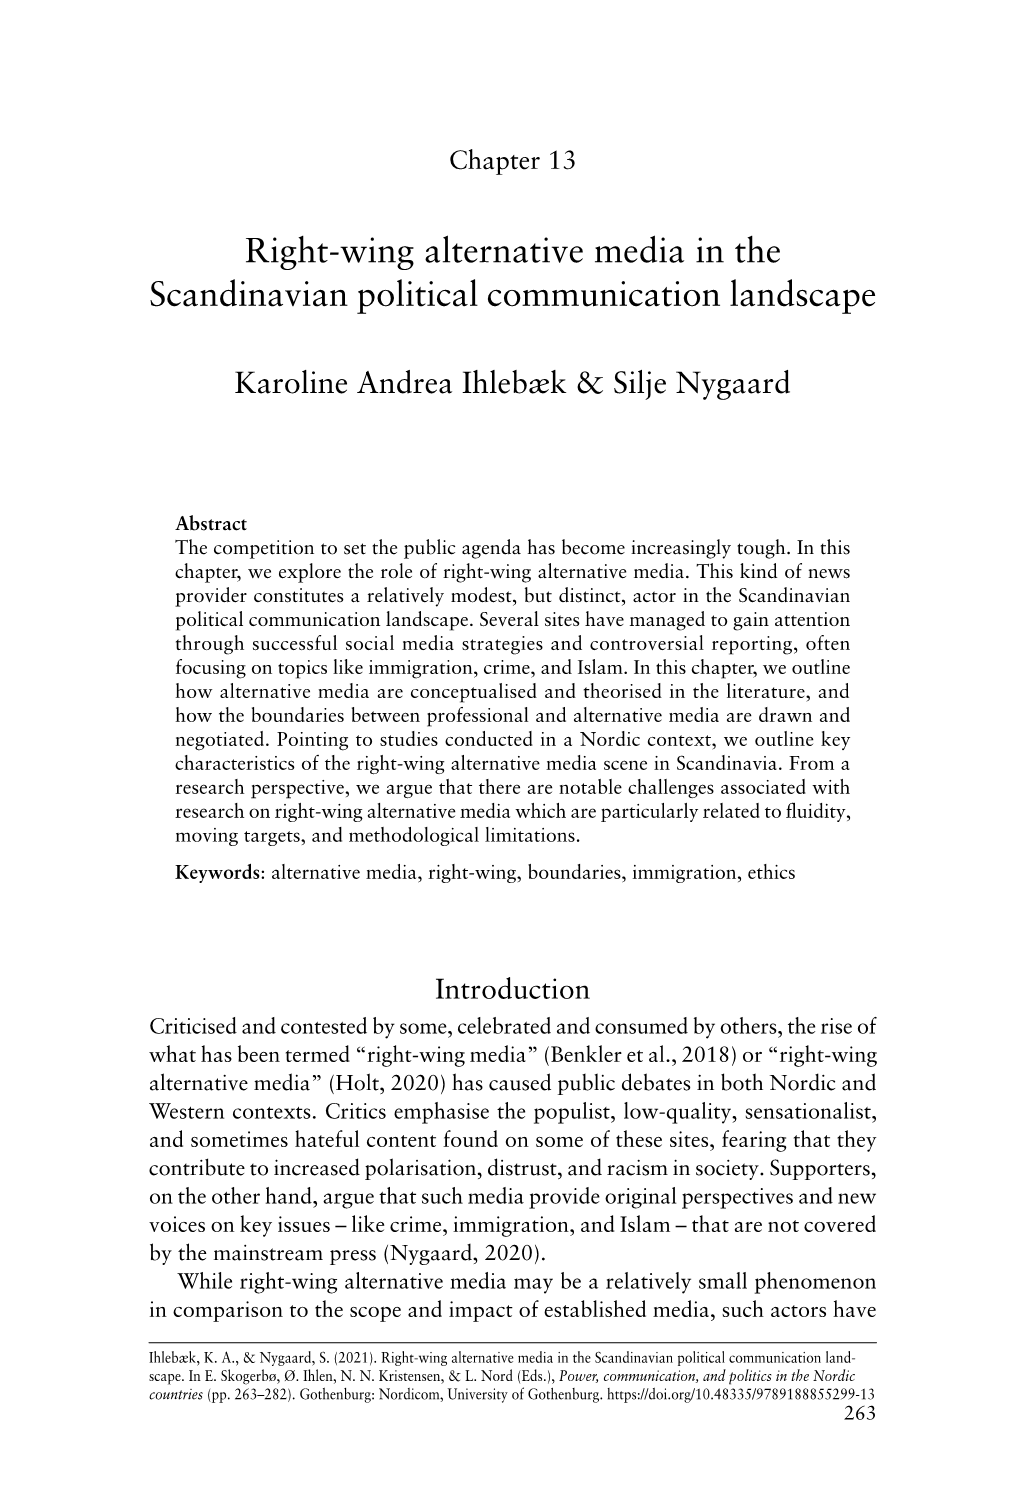 Right-Wing Alternative Media in the Scandinavian Political Communication Landscape